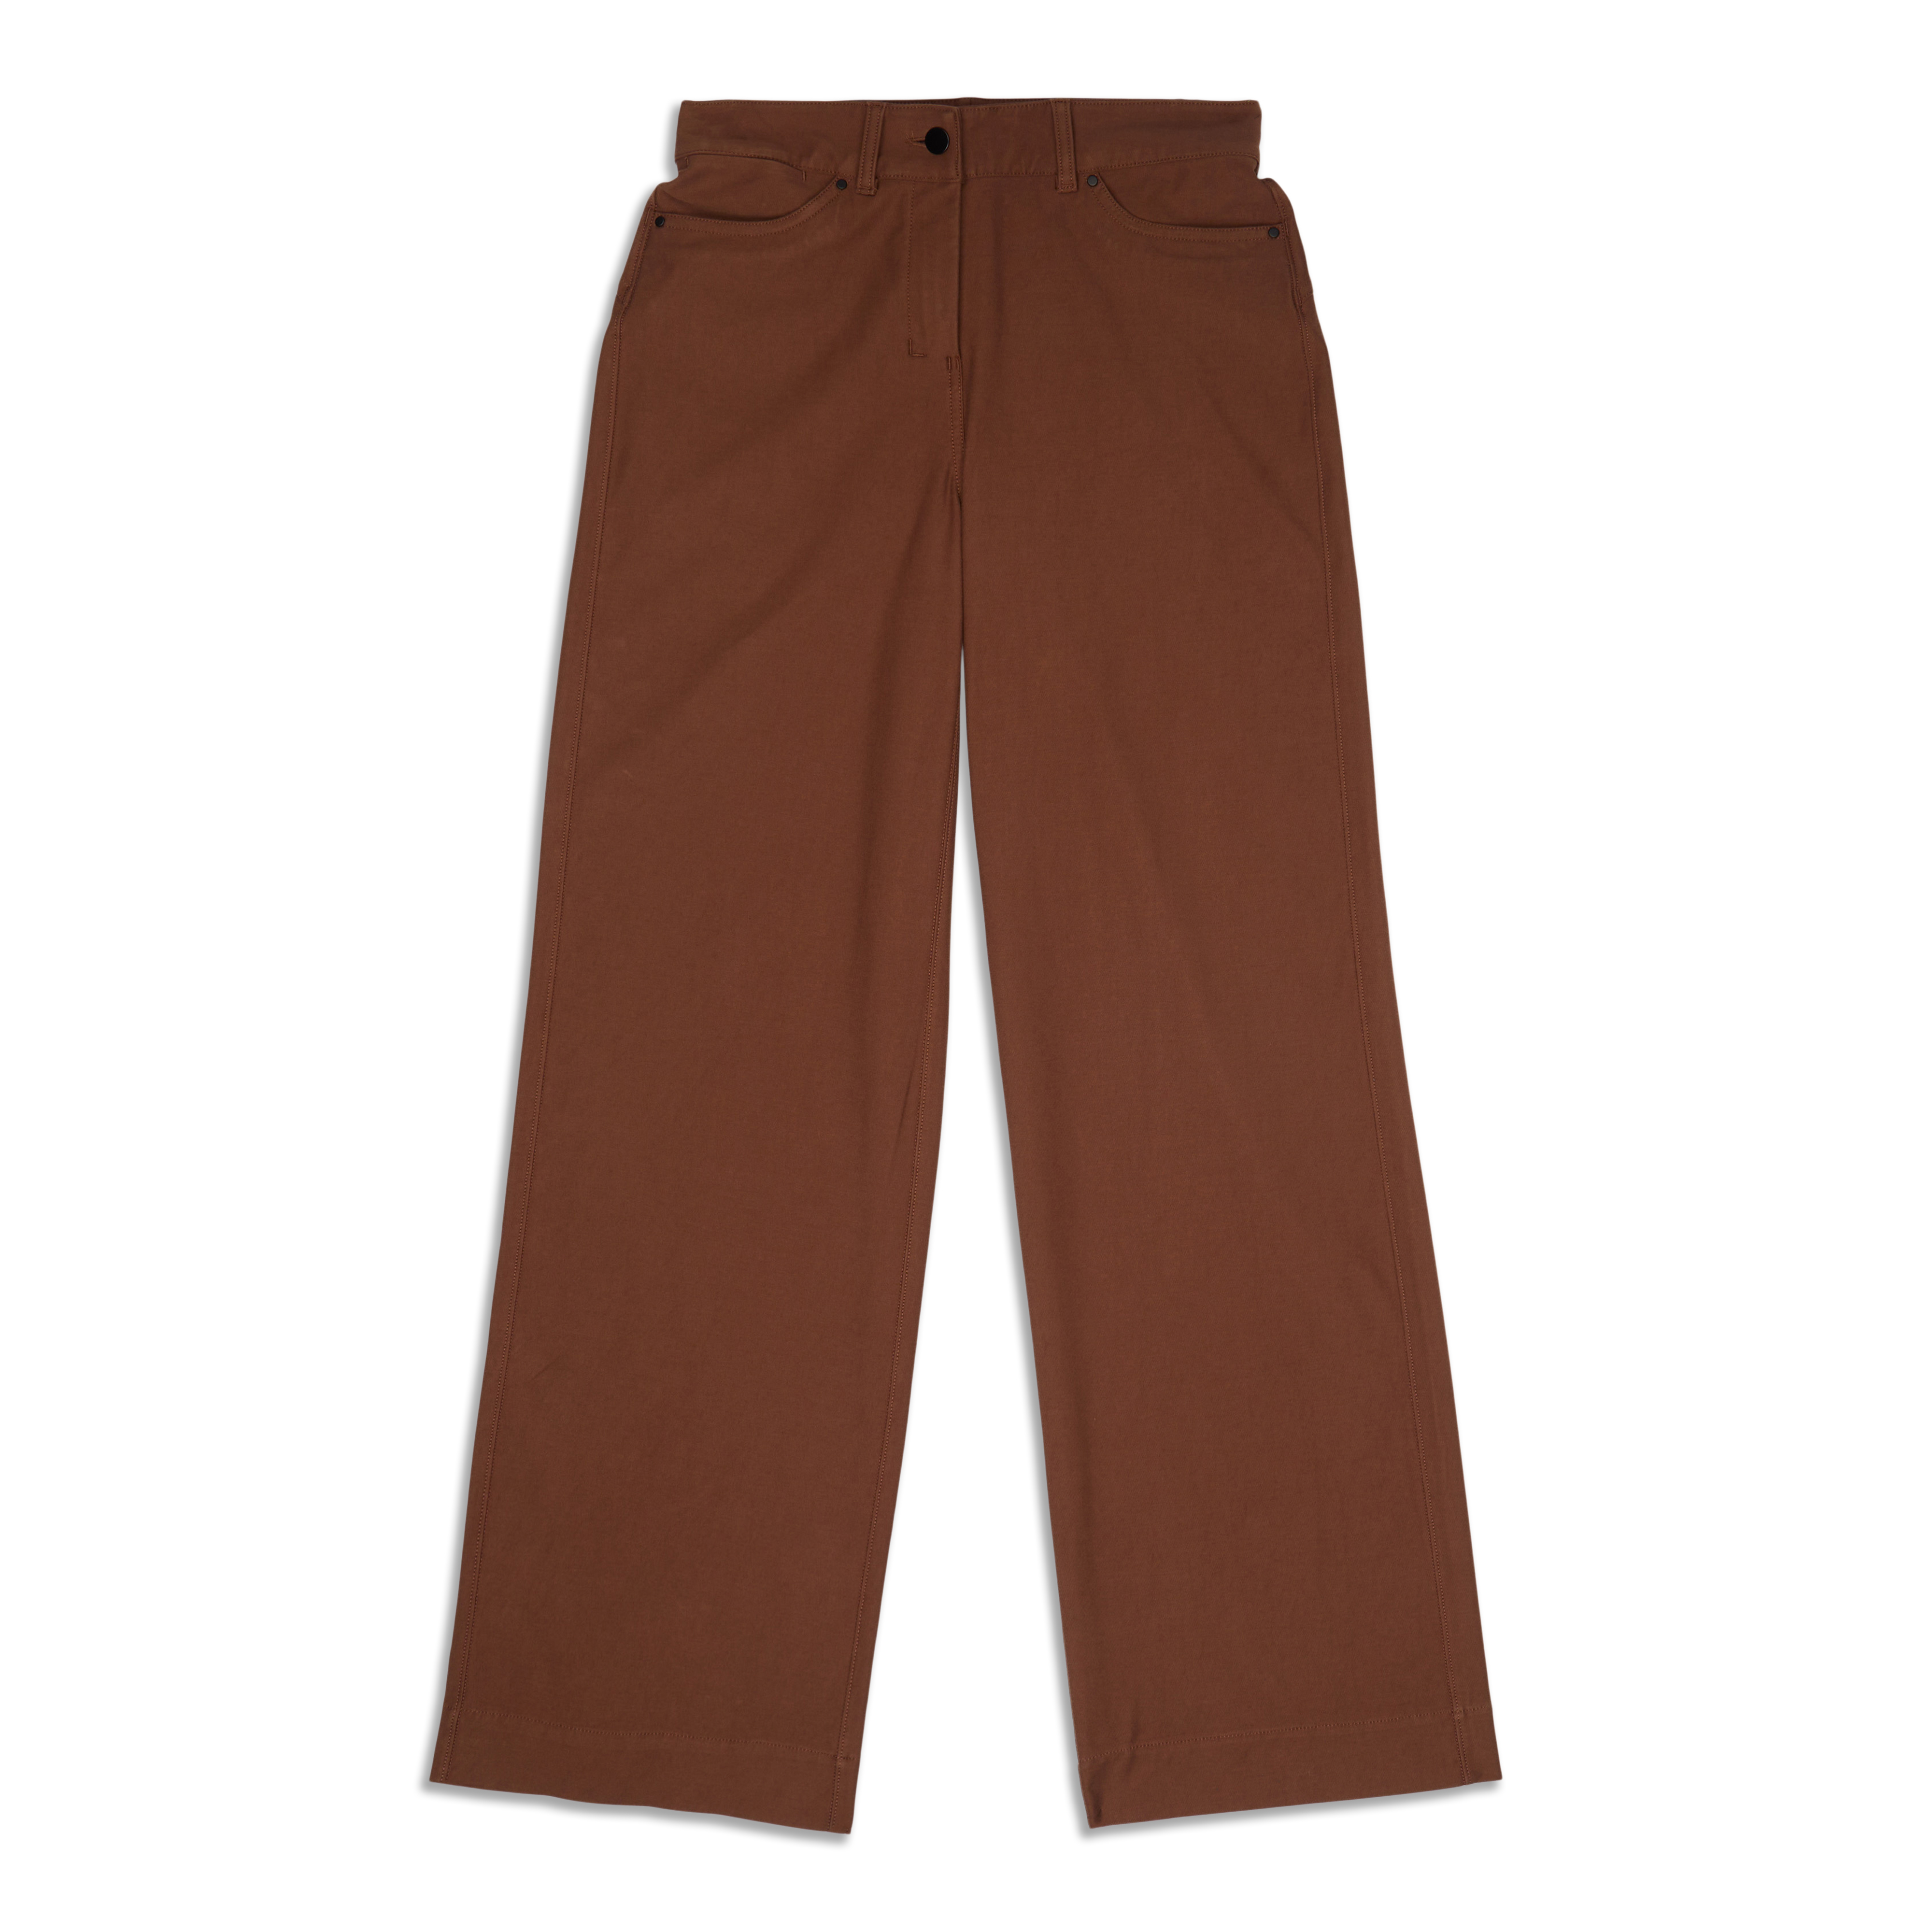 Lululemon City Sleek 5 Pocket Wide-Leg High Rise 7/8 Length Pant Trench  size 29